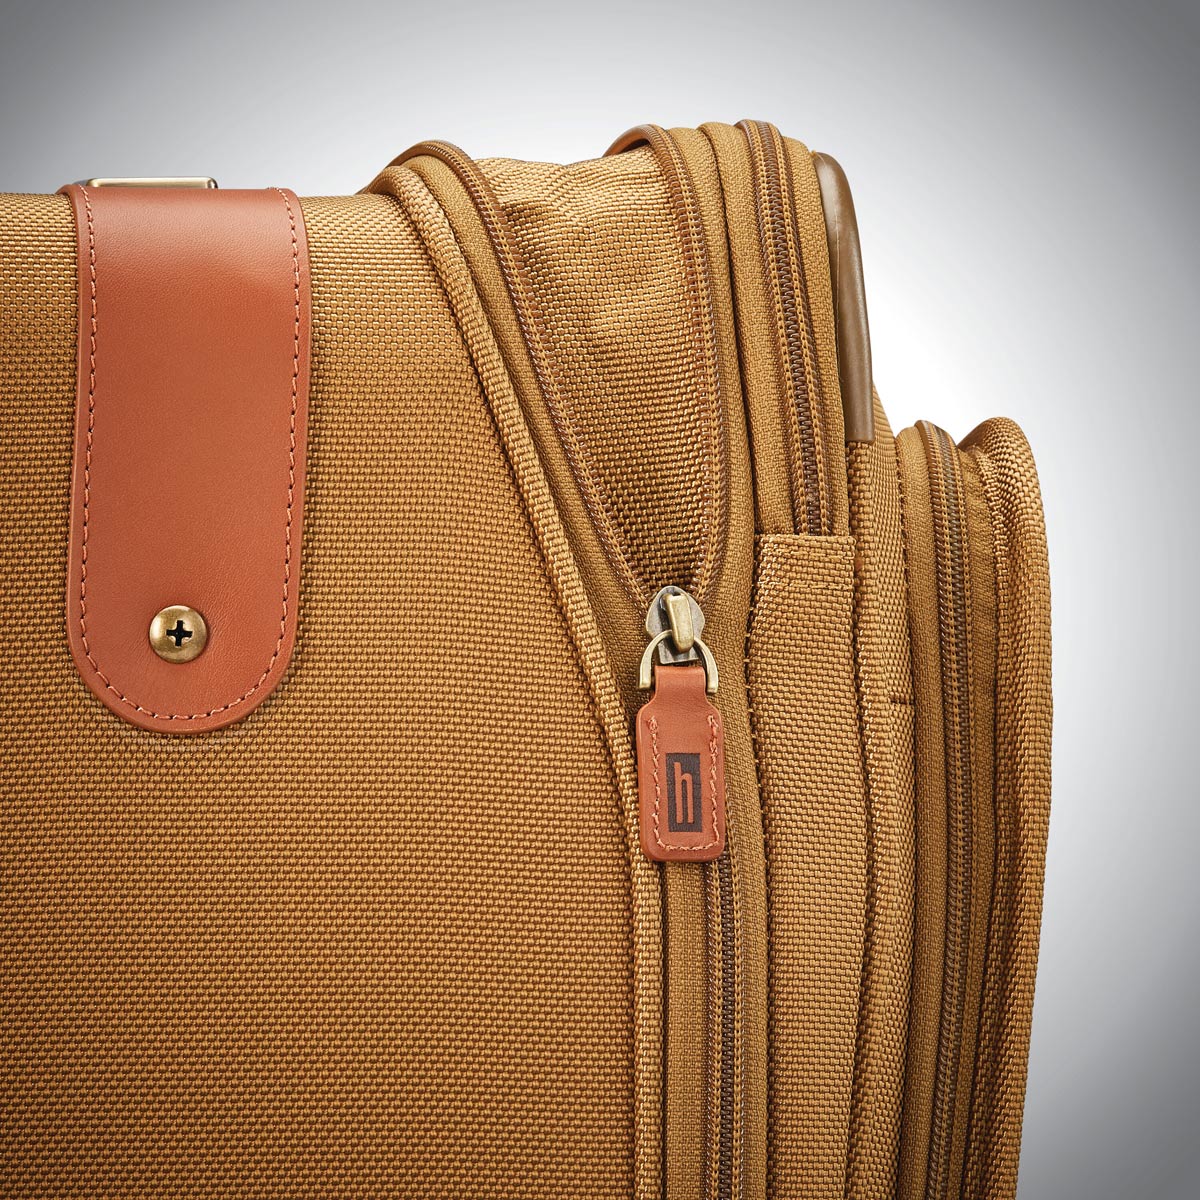 Hartmann Ratio Classic Deluxe 2 Carry-On Spinner Garment Bag